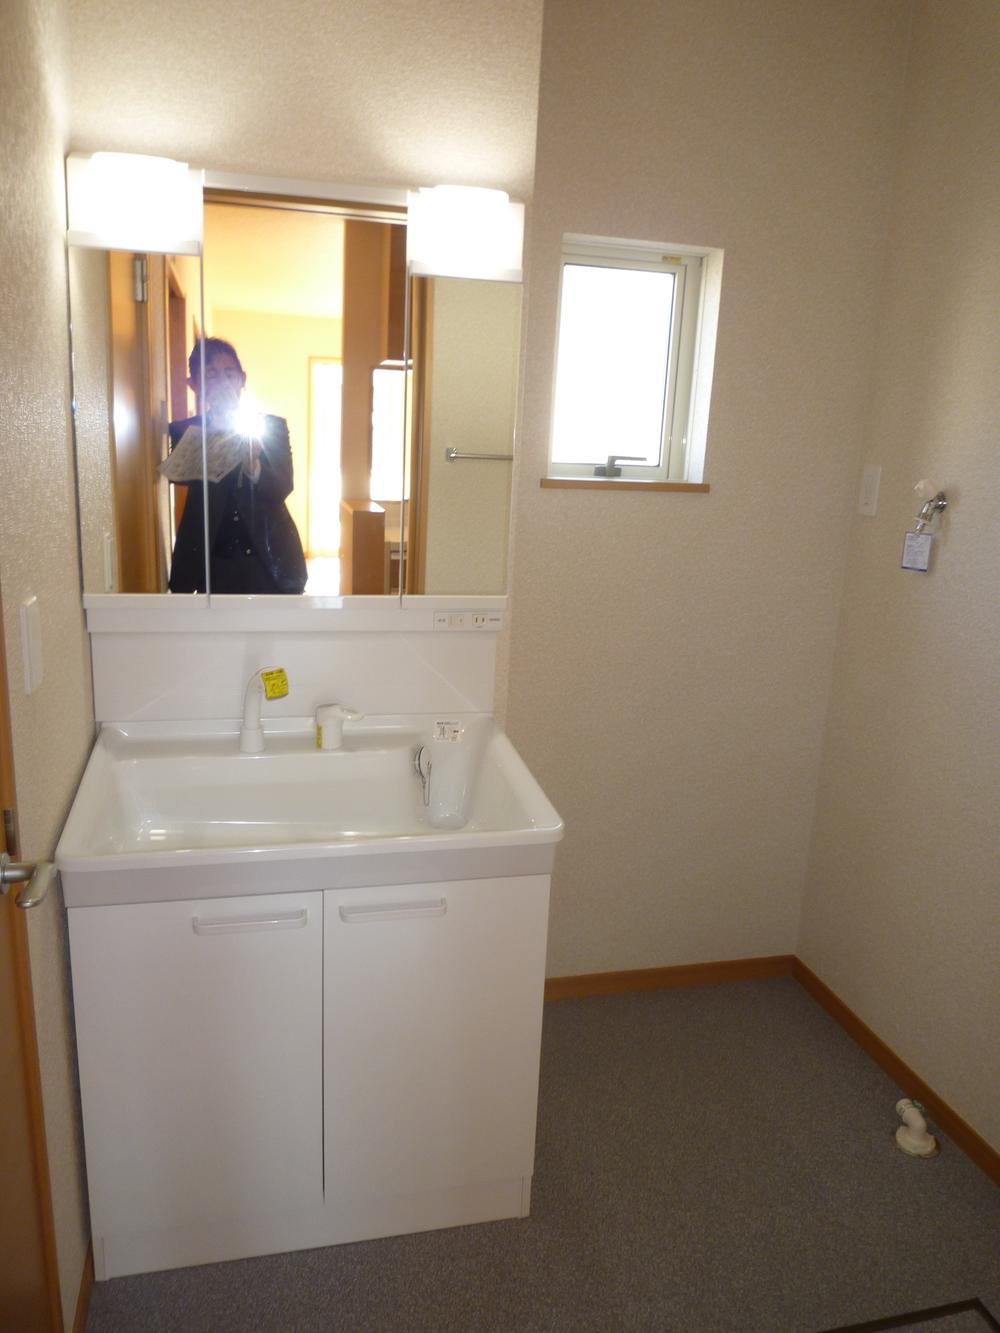 Wash basin, toilet. Three-sided mirror ・ Shampoo with Dresser